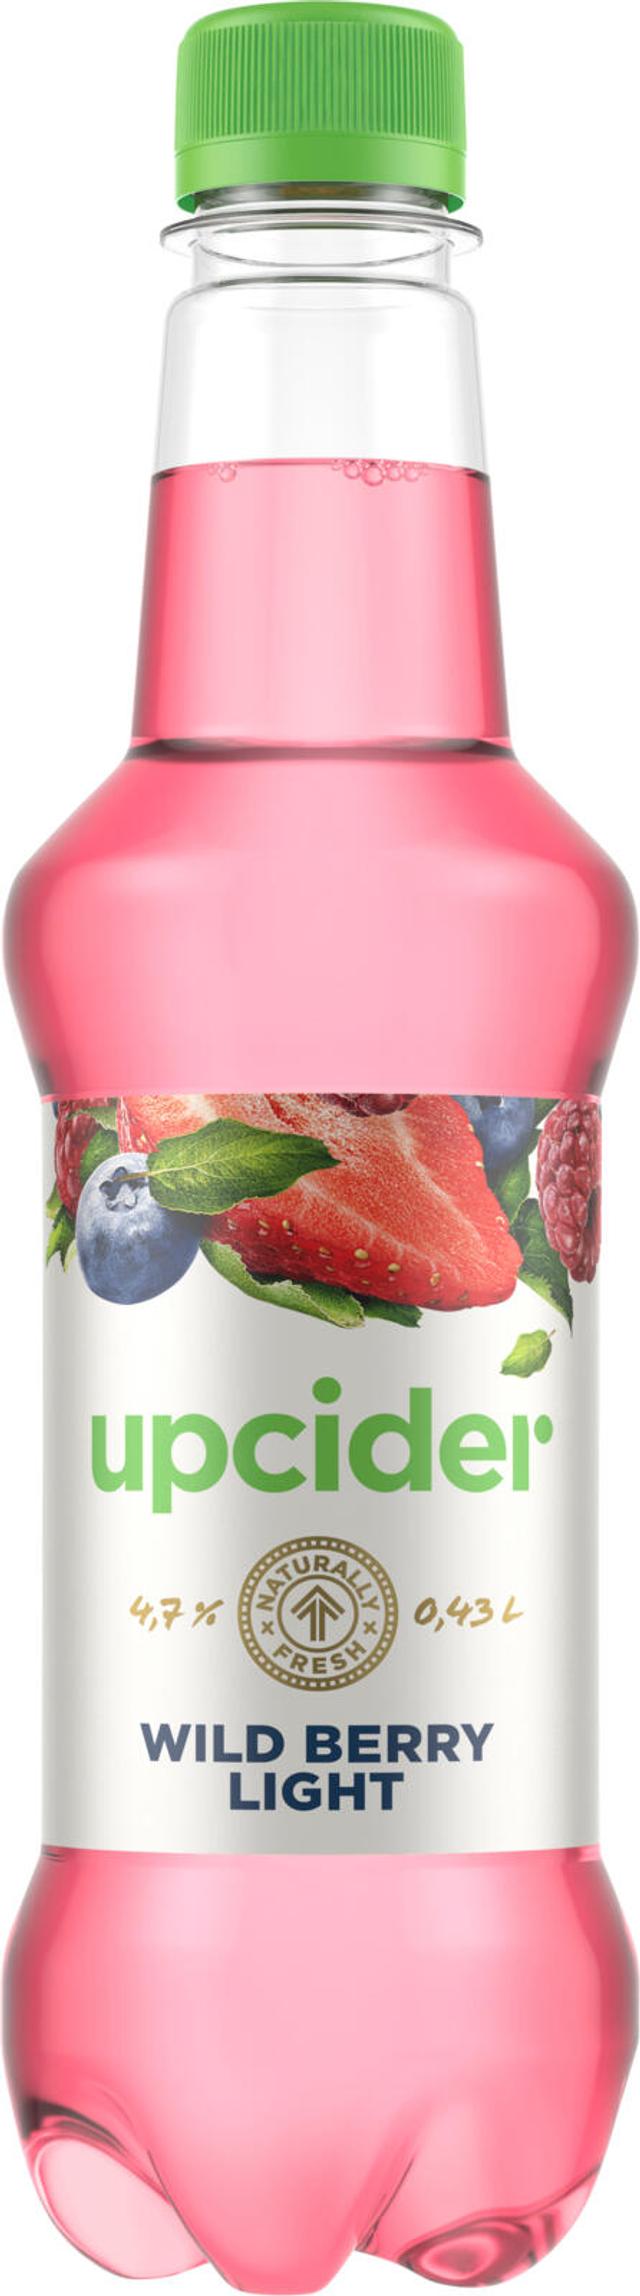 Upcider Wild Berry Light siideri 4,7% 0,43 l